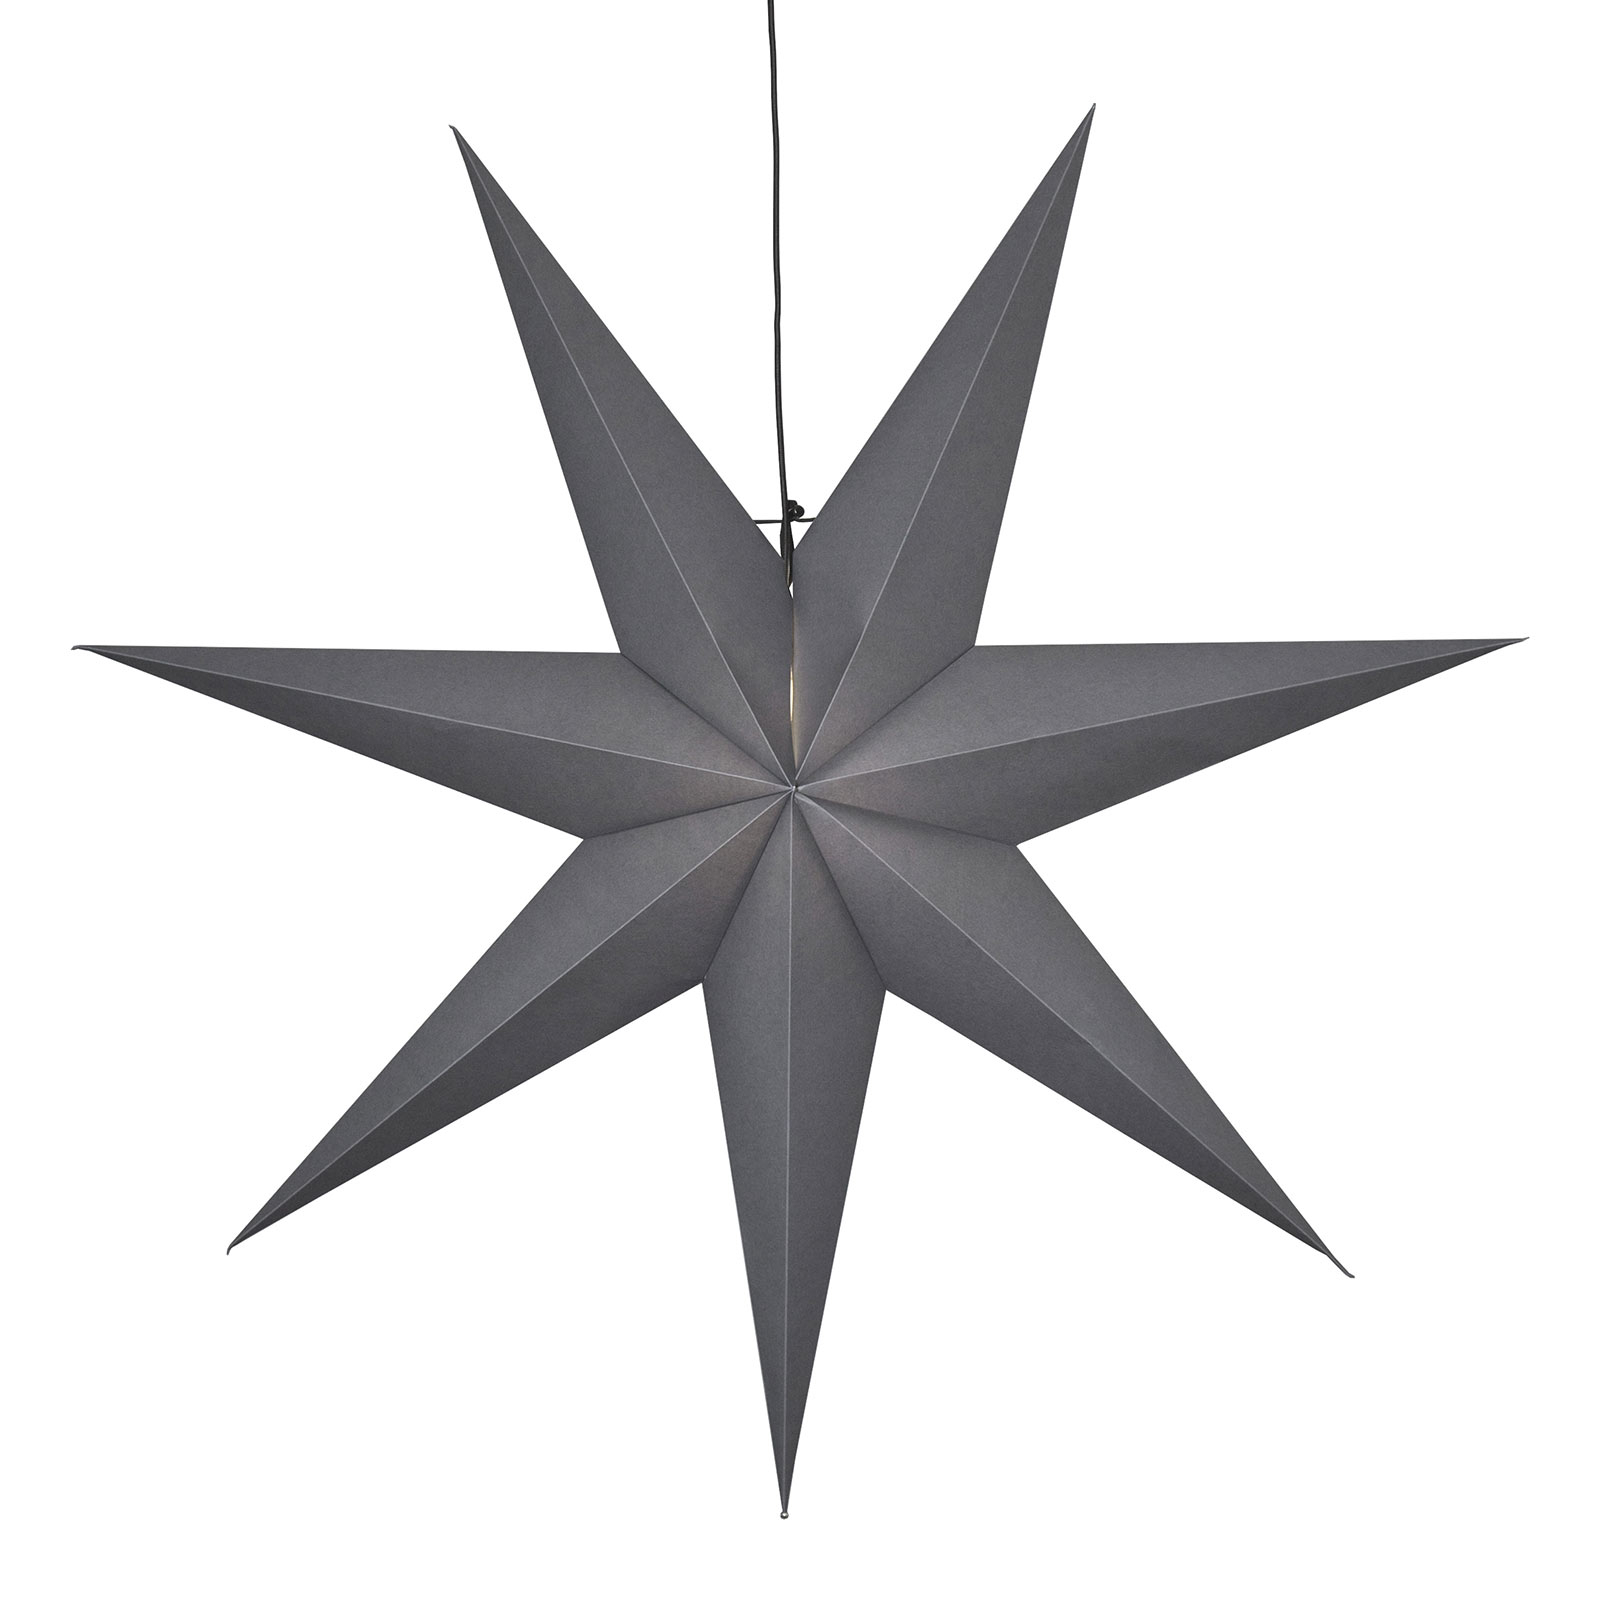 Ozen seven-pointed paper star, 100 cm diameter